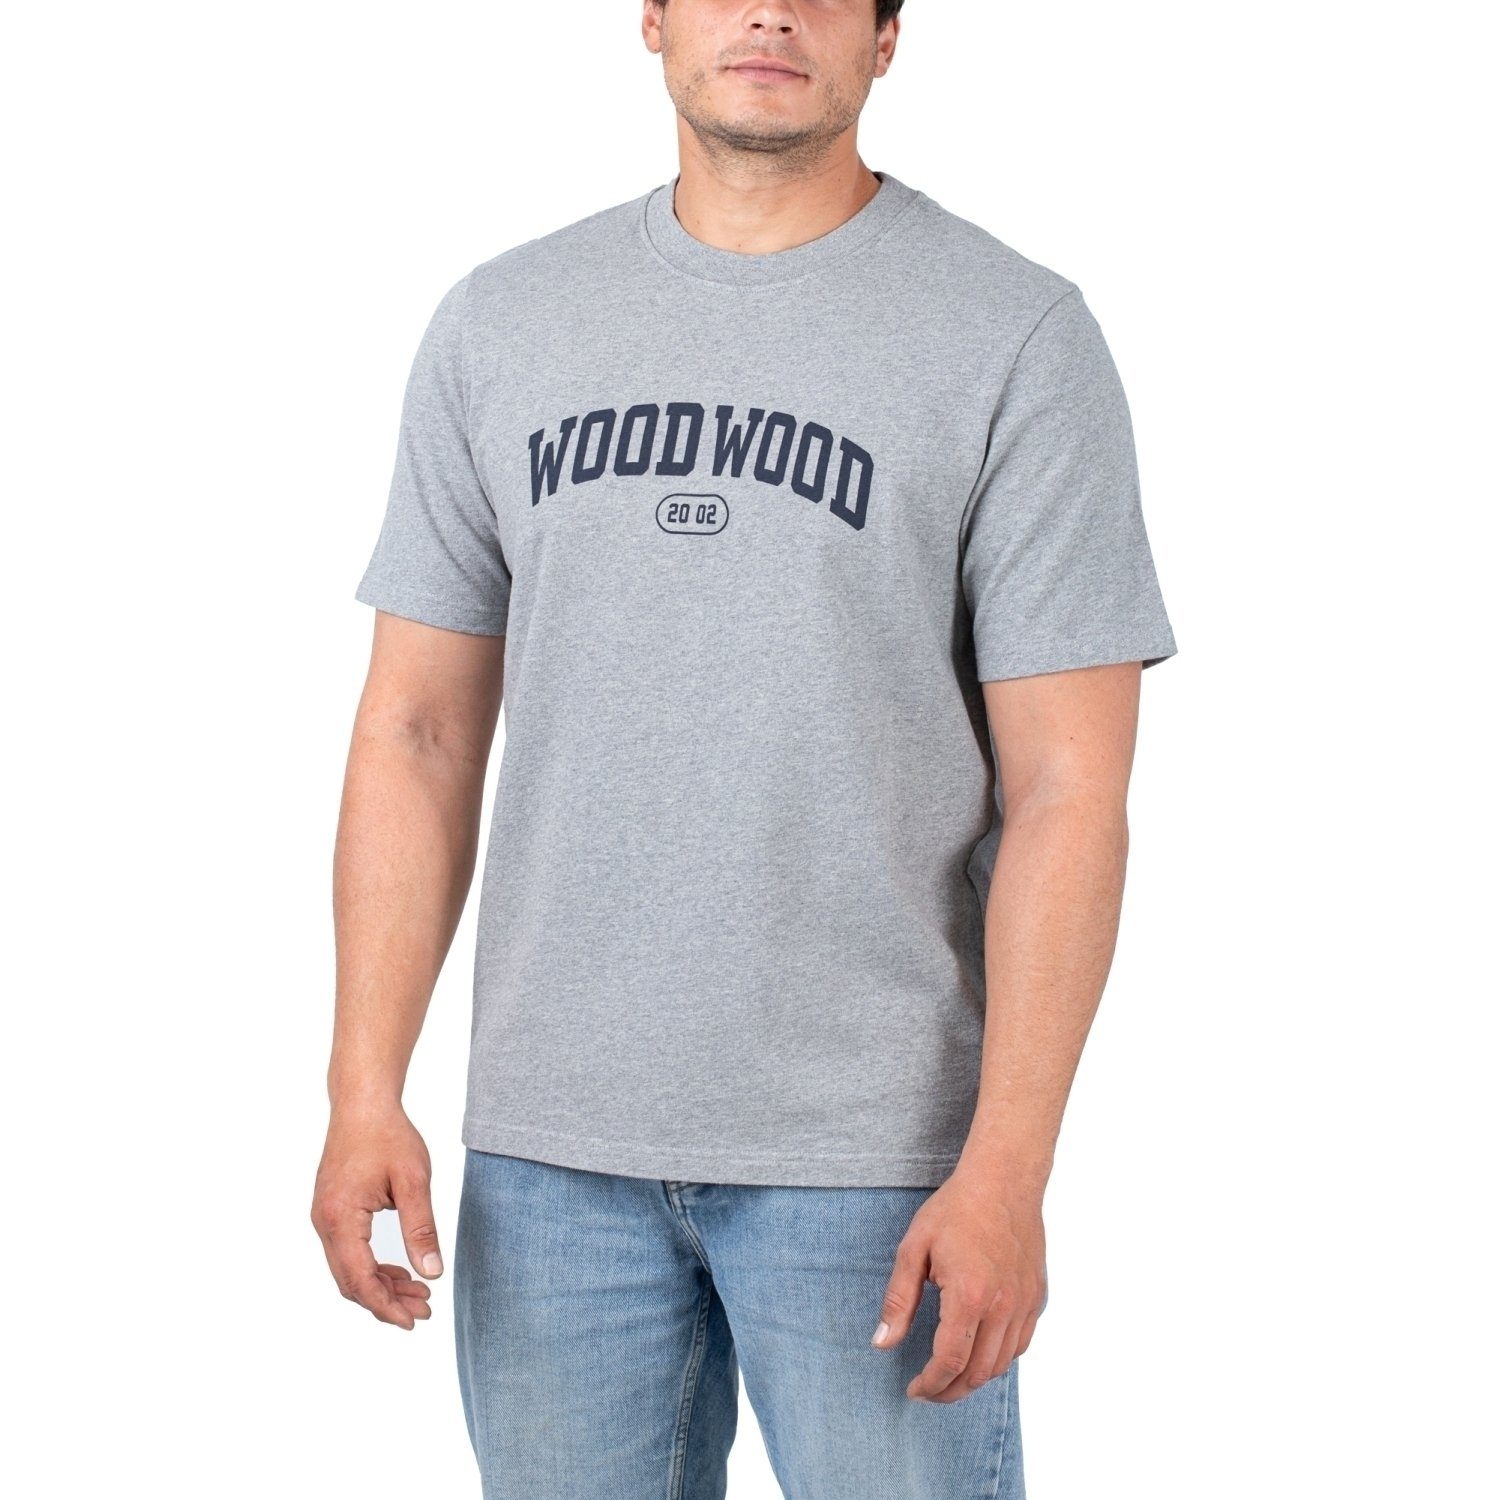 T-Shirt Tee IVY Bobby Wood Melange WOOD Grey WOOD Wood